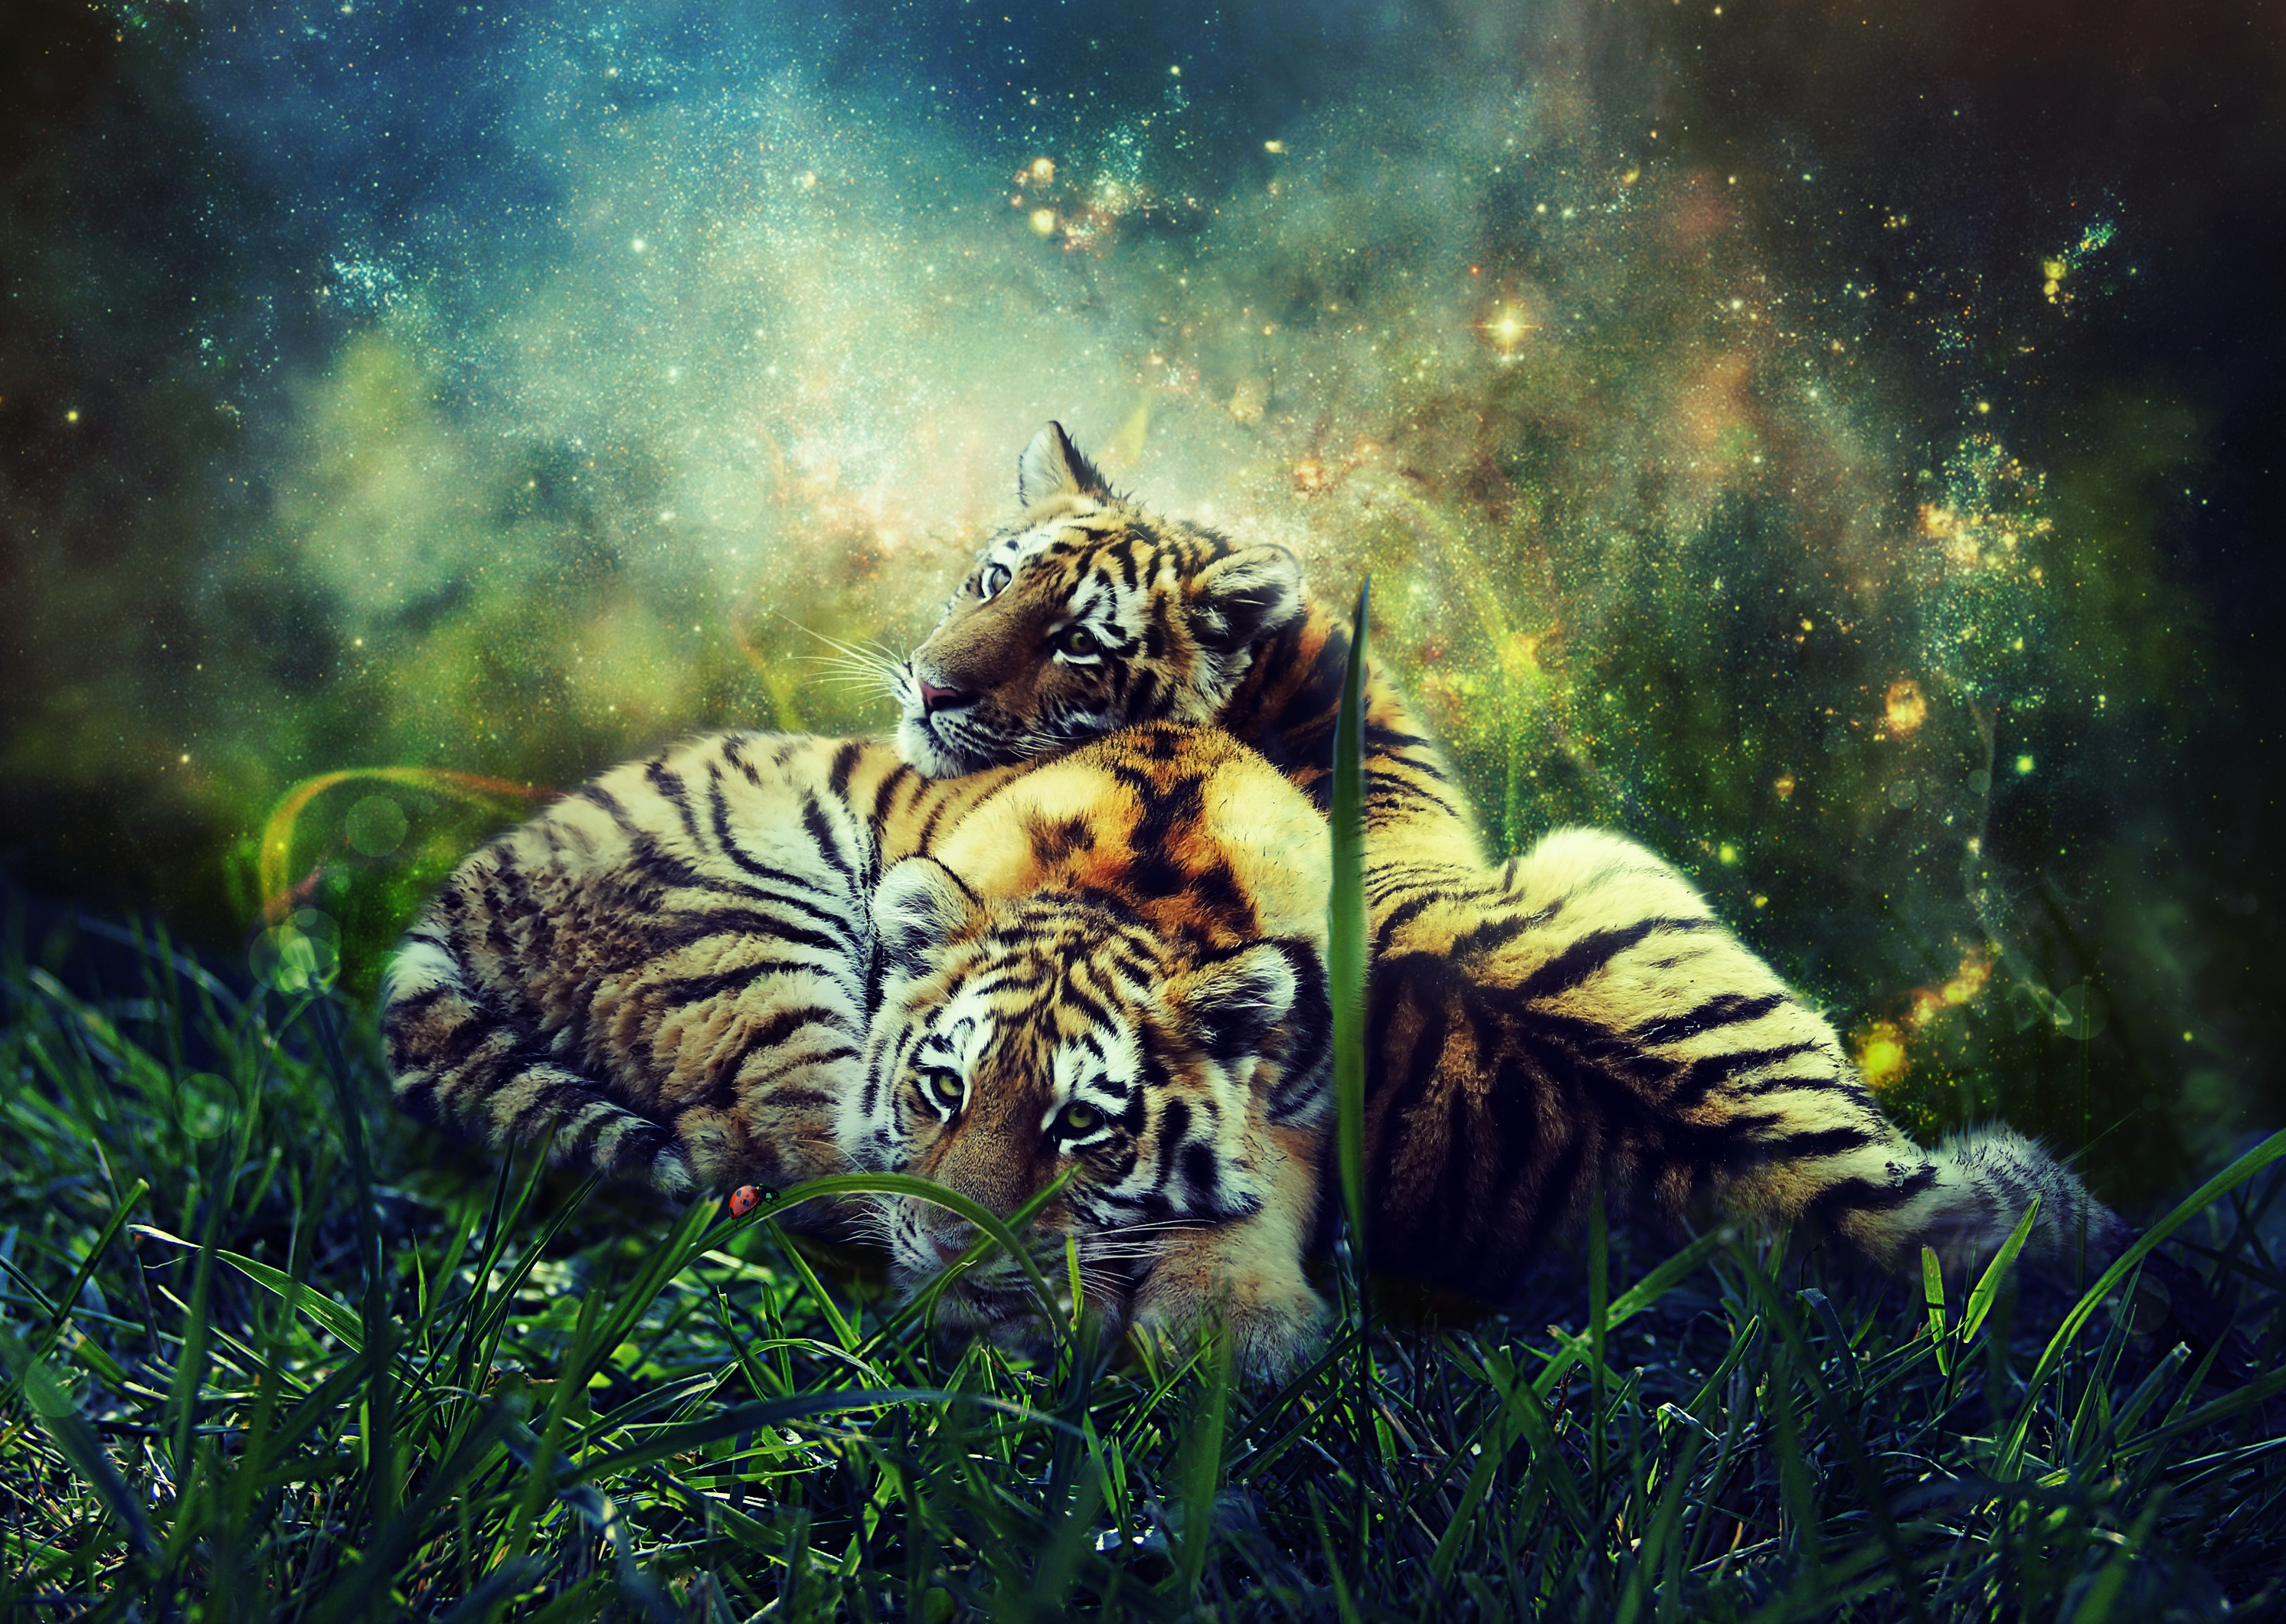 Ultra HD 4K photoshop, tigers, wildlife, animals